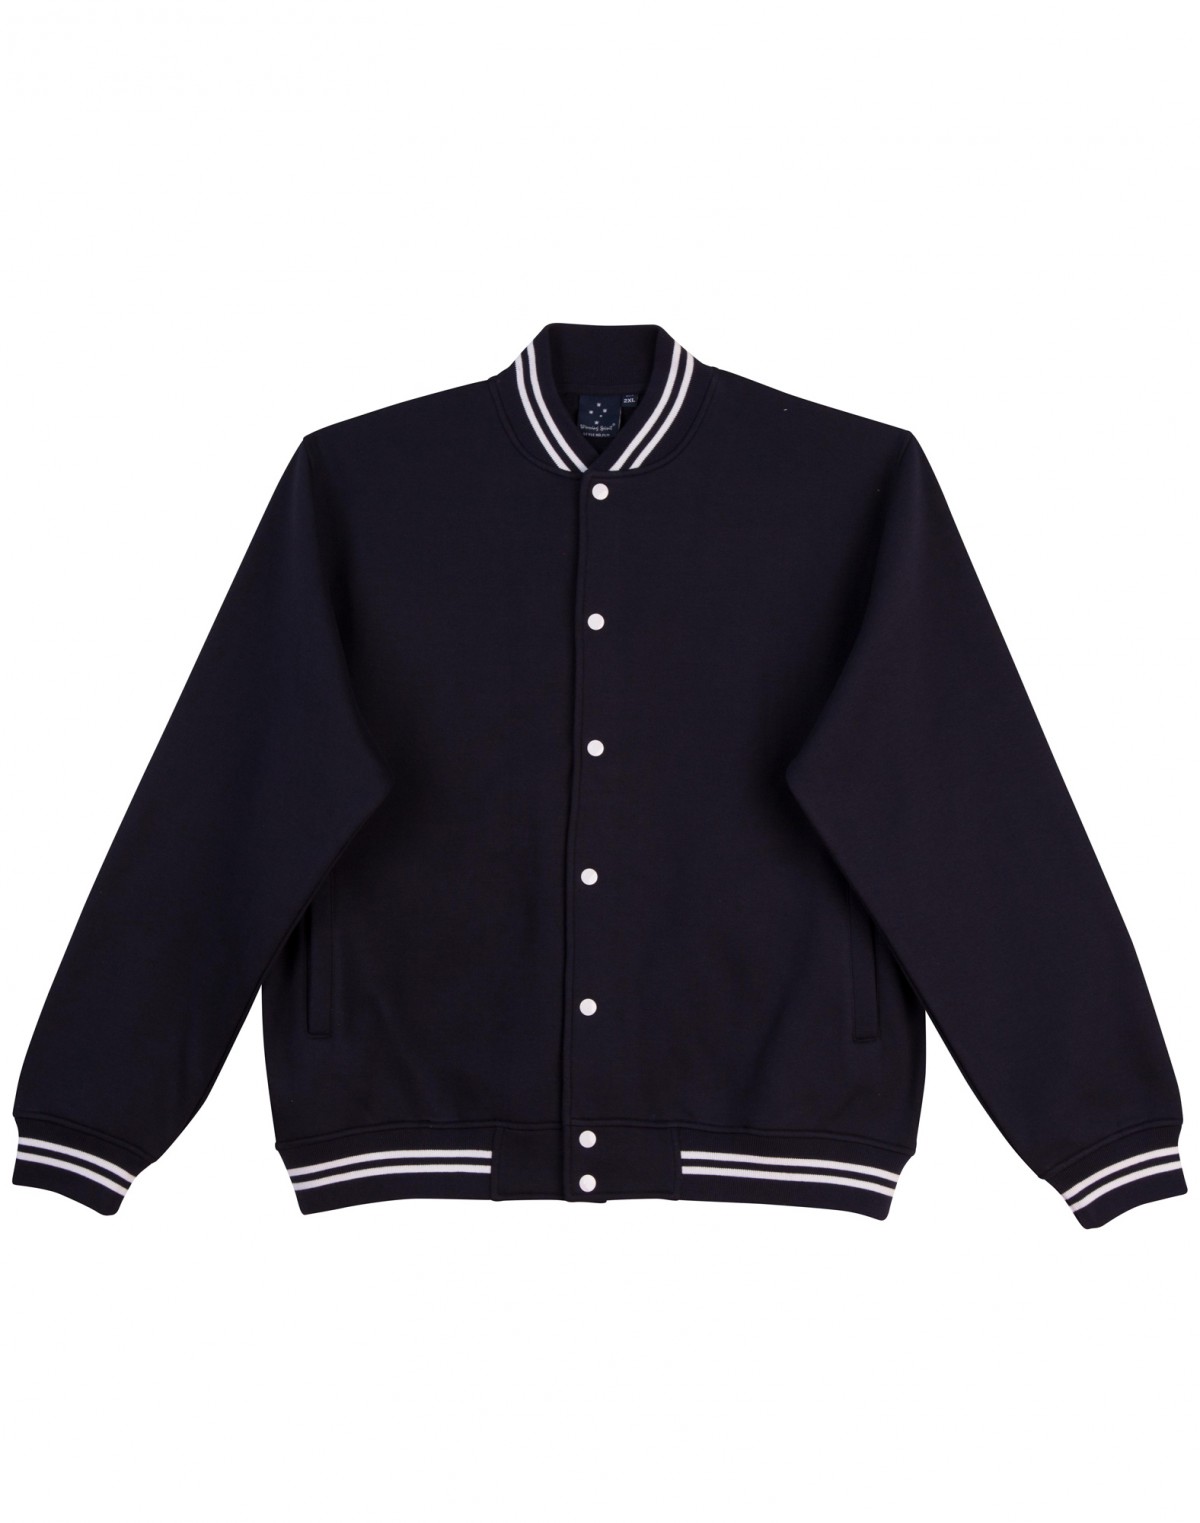 Adult's Fleece Varsity Jacket - Jackets & Vests - OUTERWEAR - Our Range